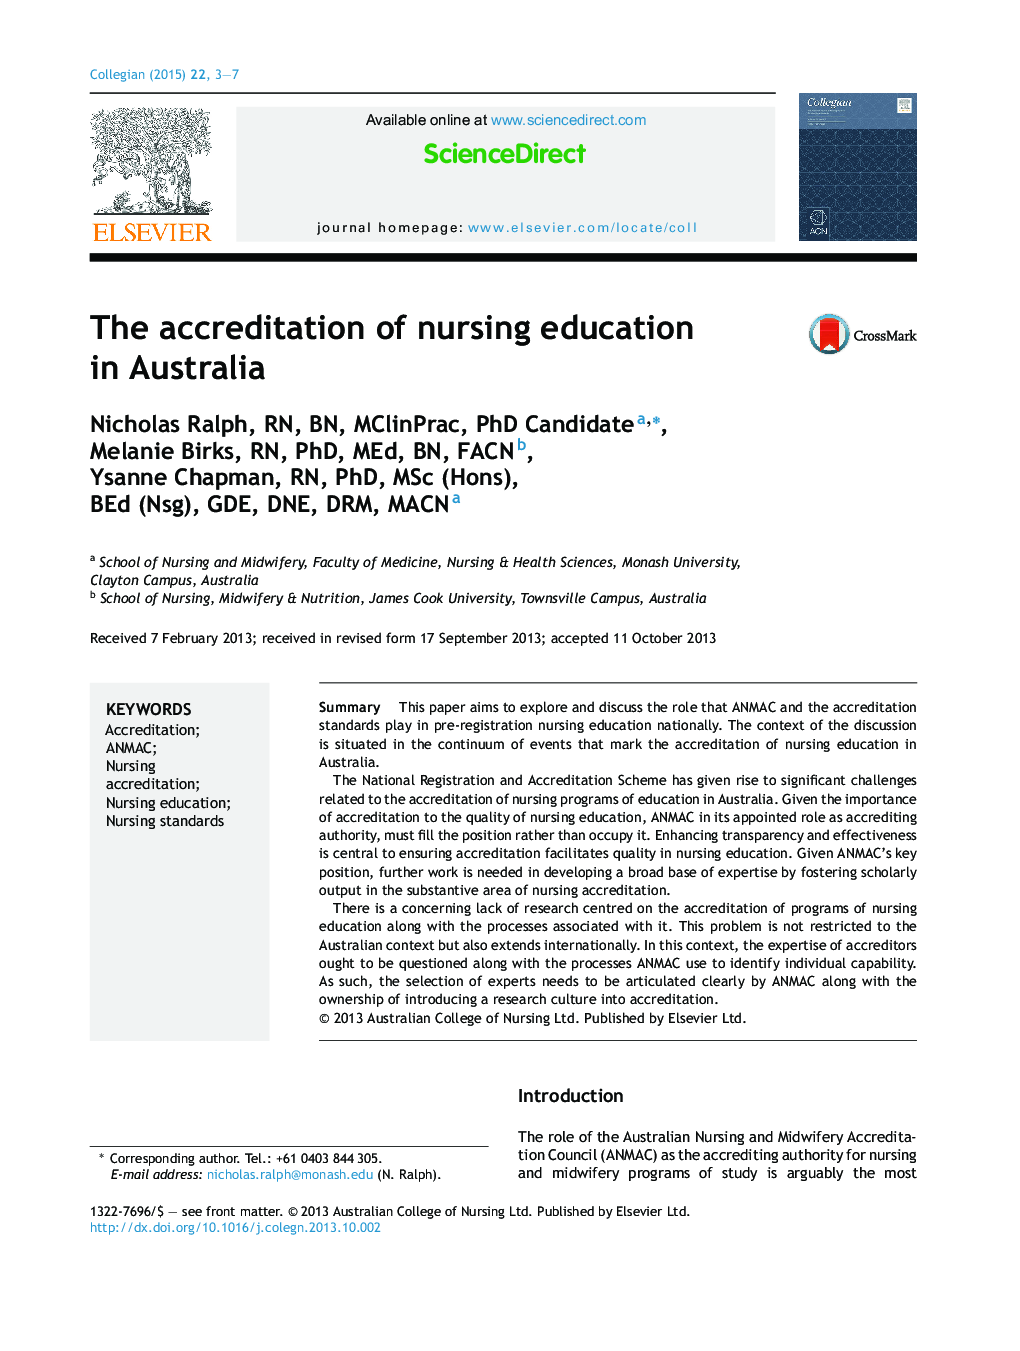 The accreditation of nursing education in Australia